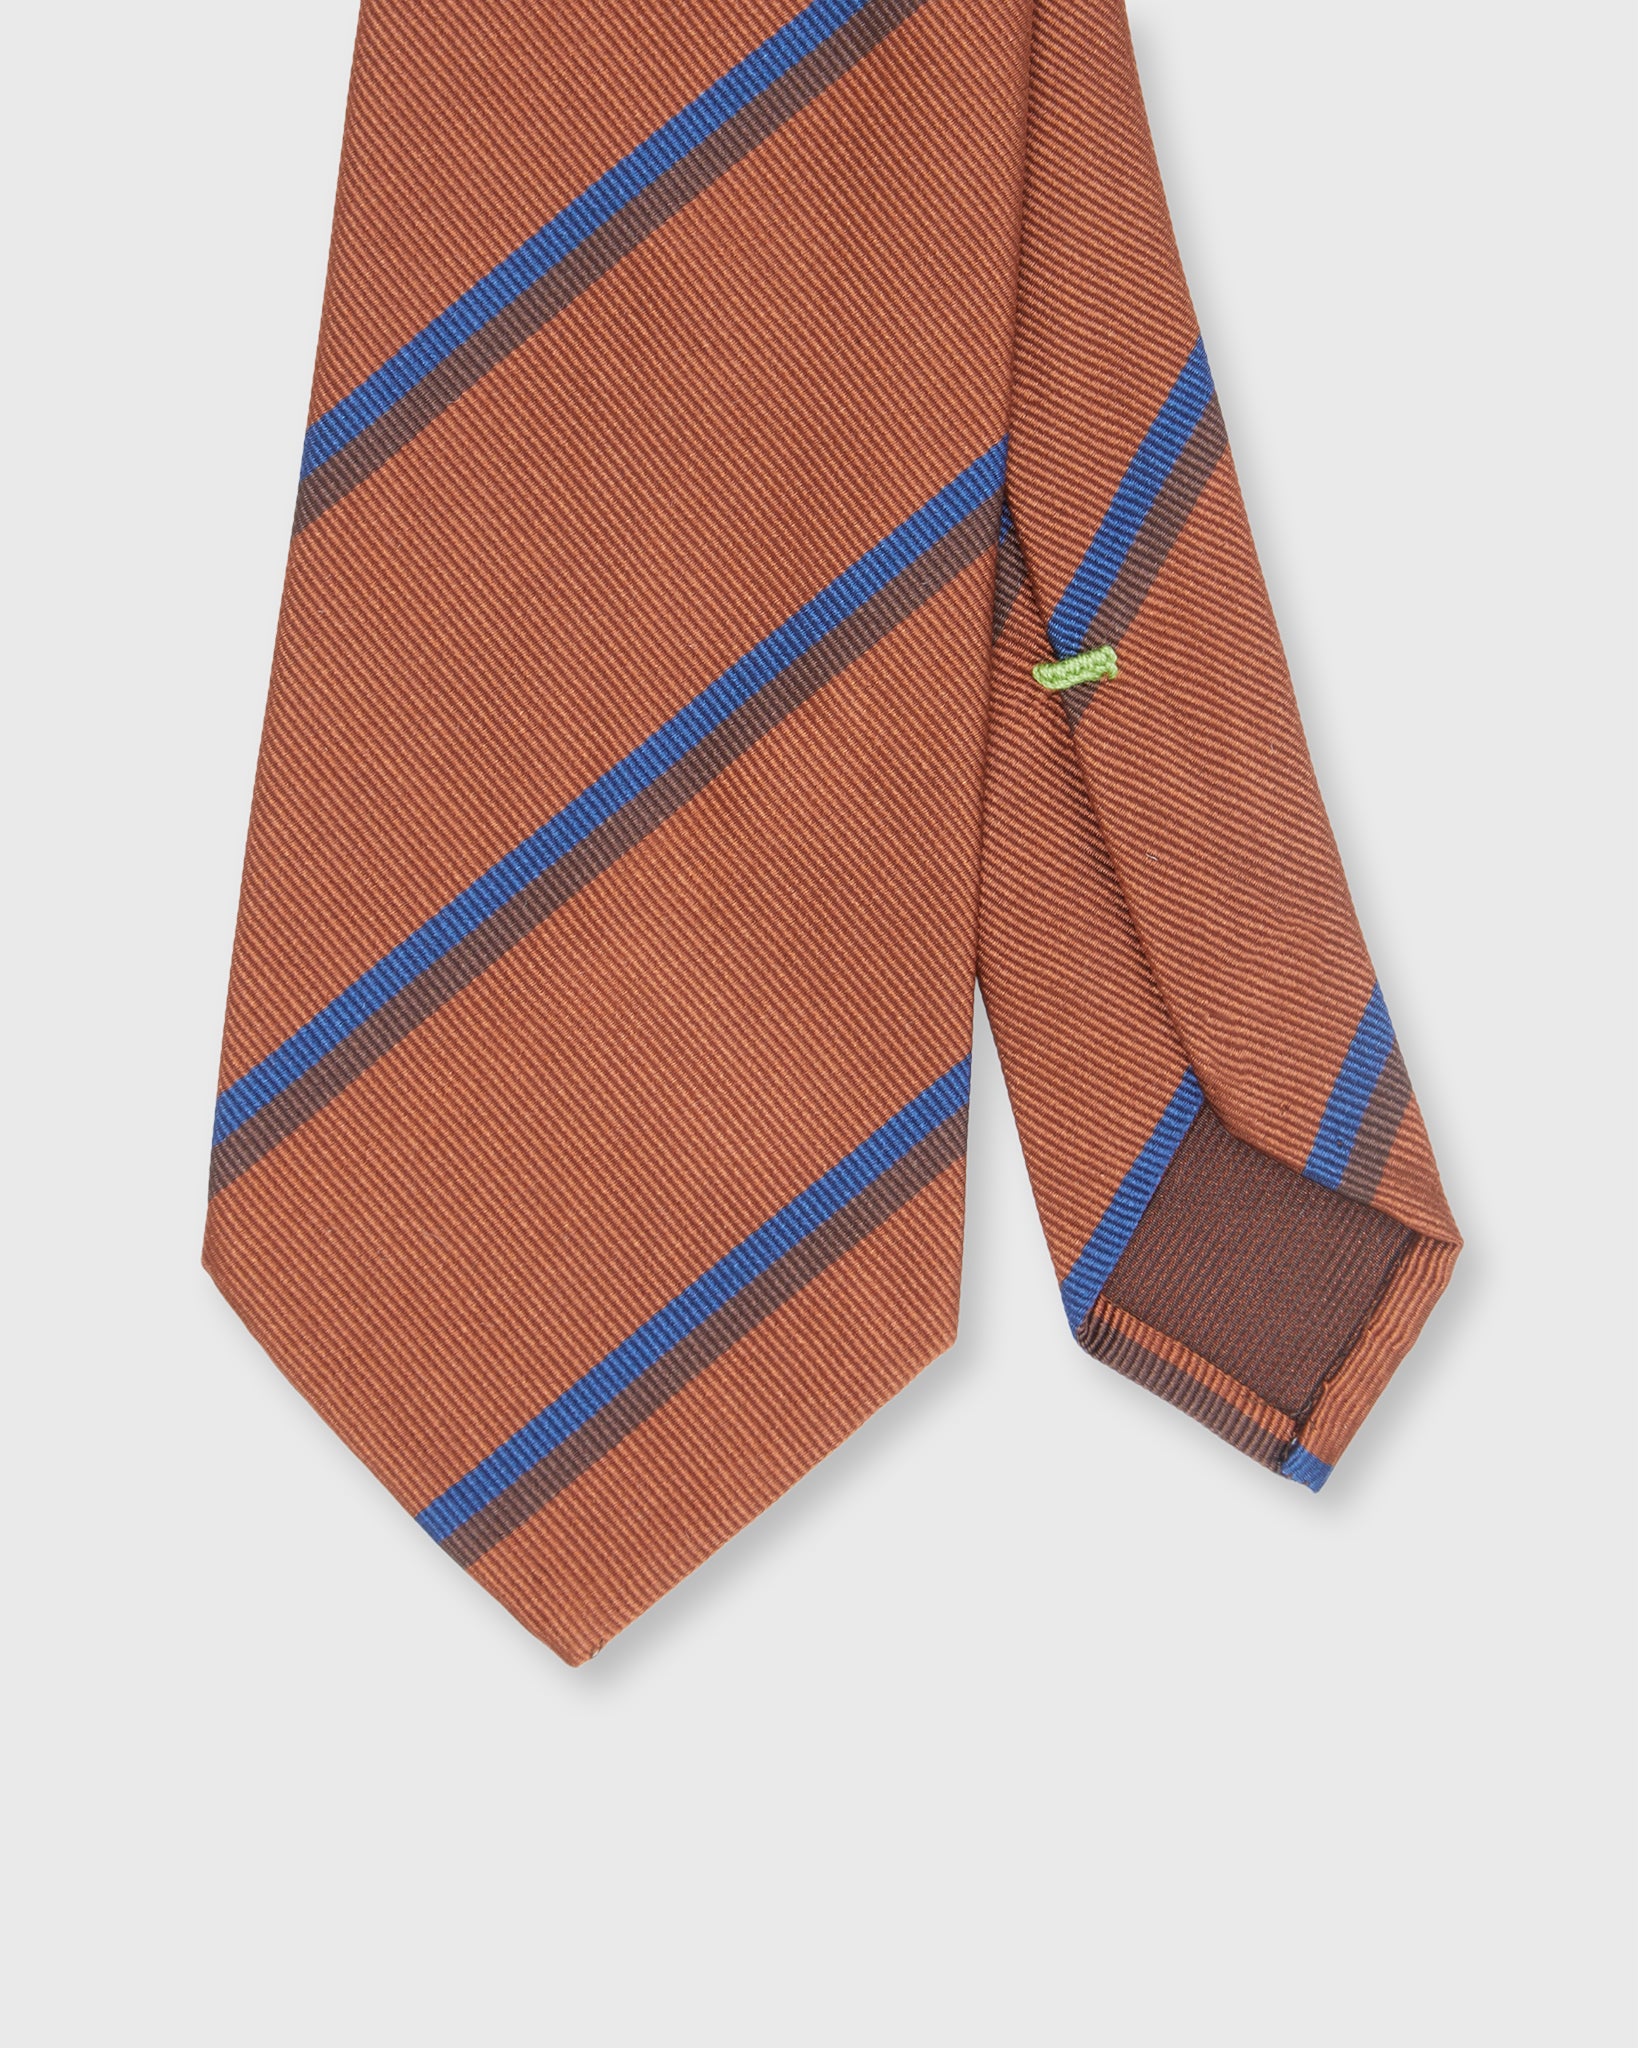 Silk Woven Tie in Orange/Blue/Brown Stripe